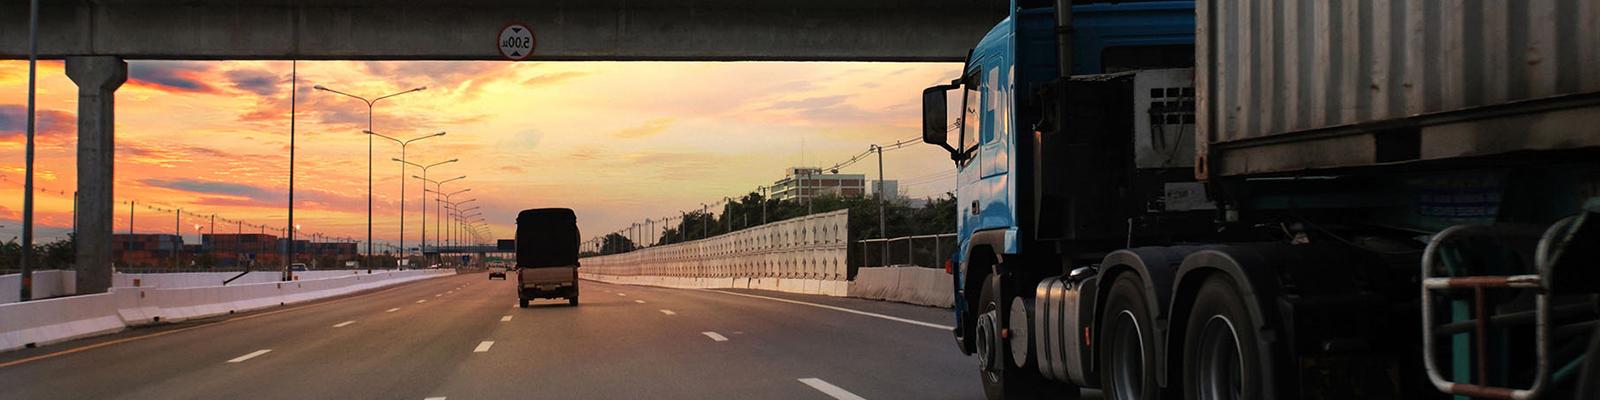 Semi truck going under an interstate bridge at sunset